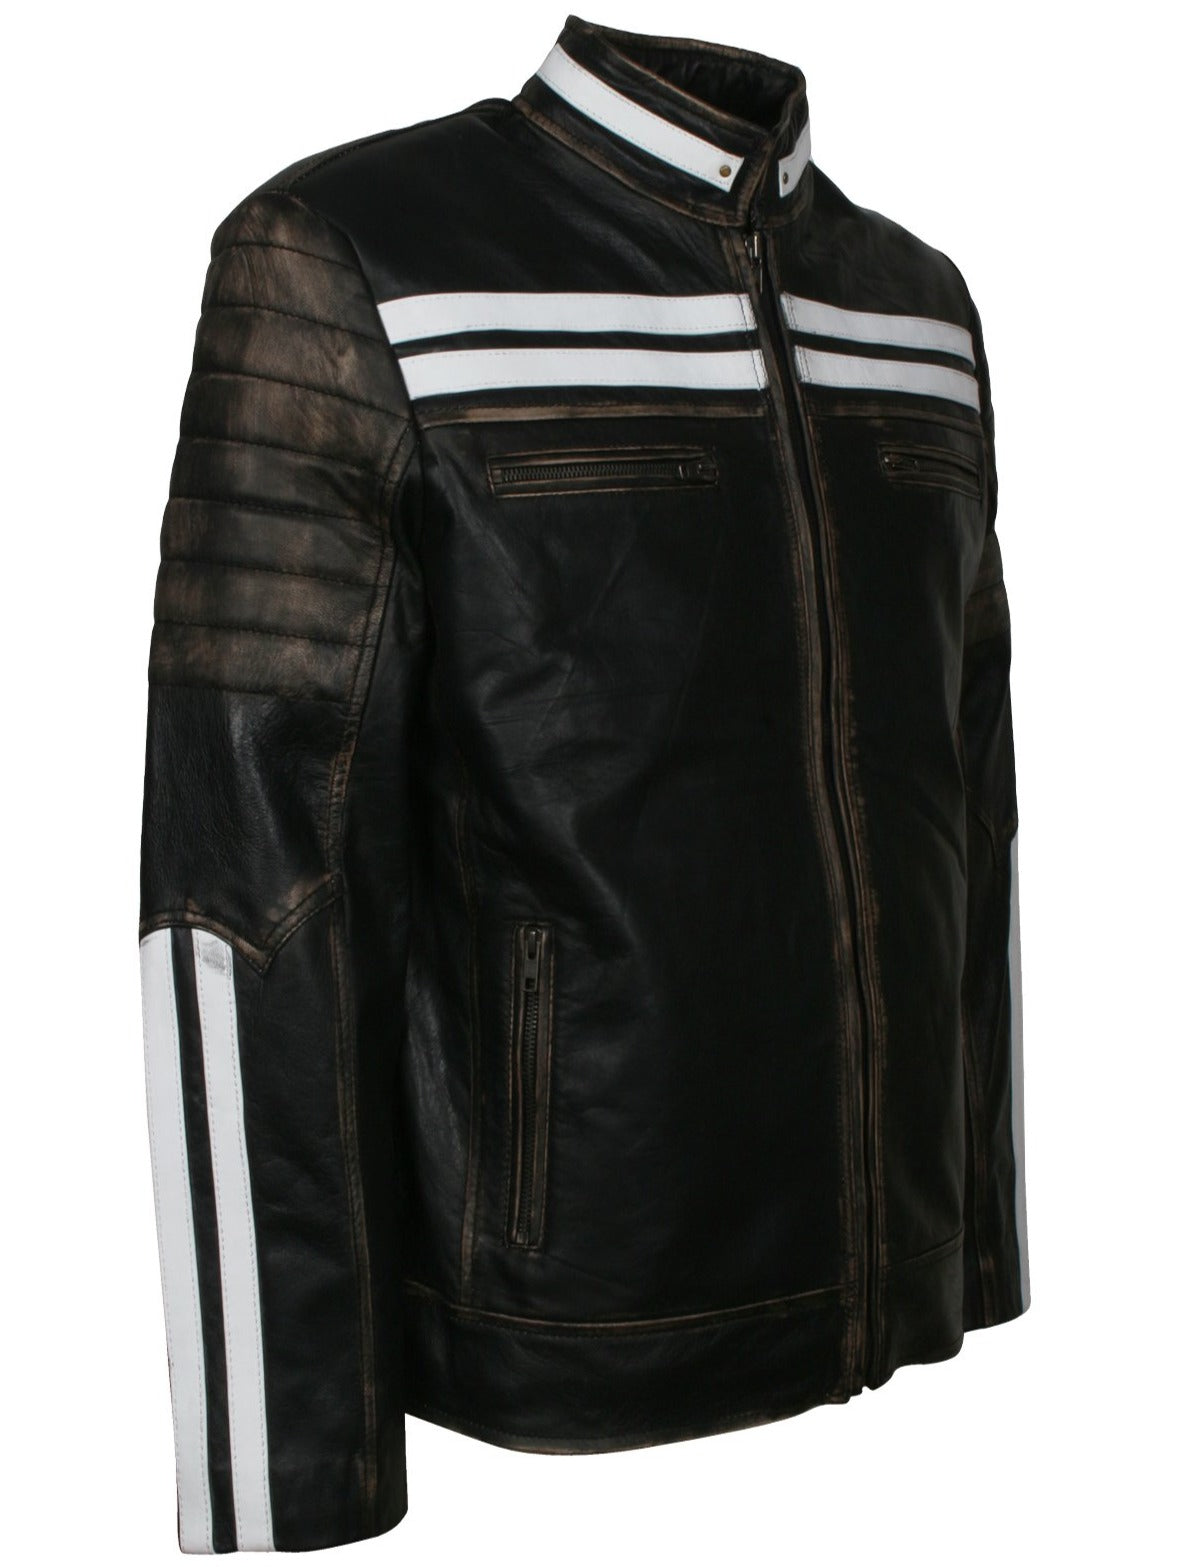 Black Jacket with White Stripes Biker Leather